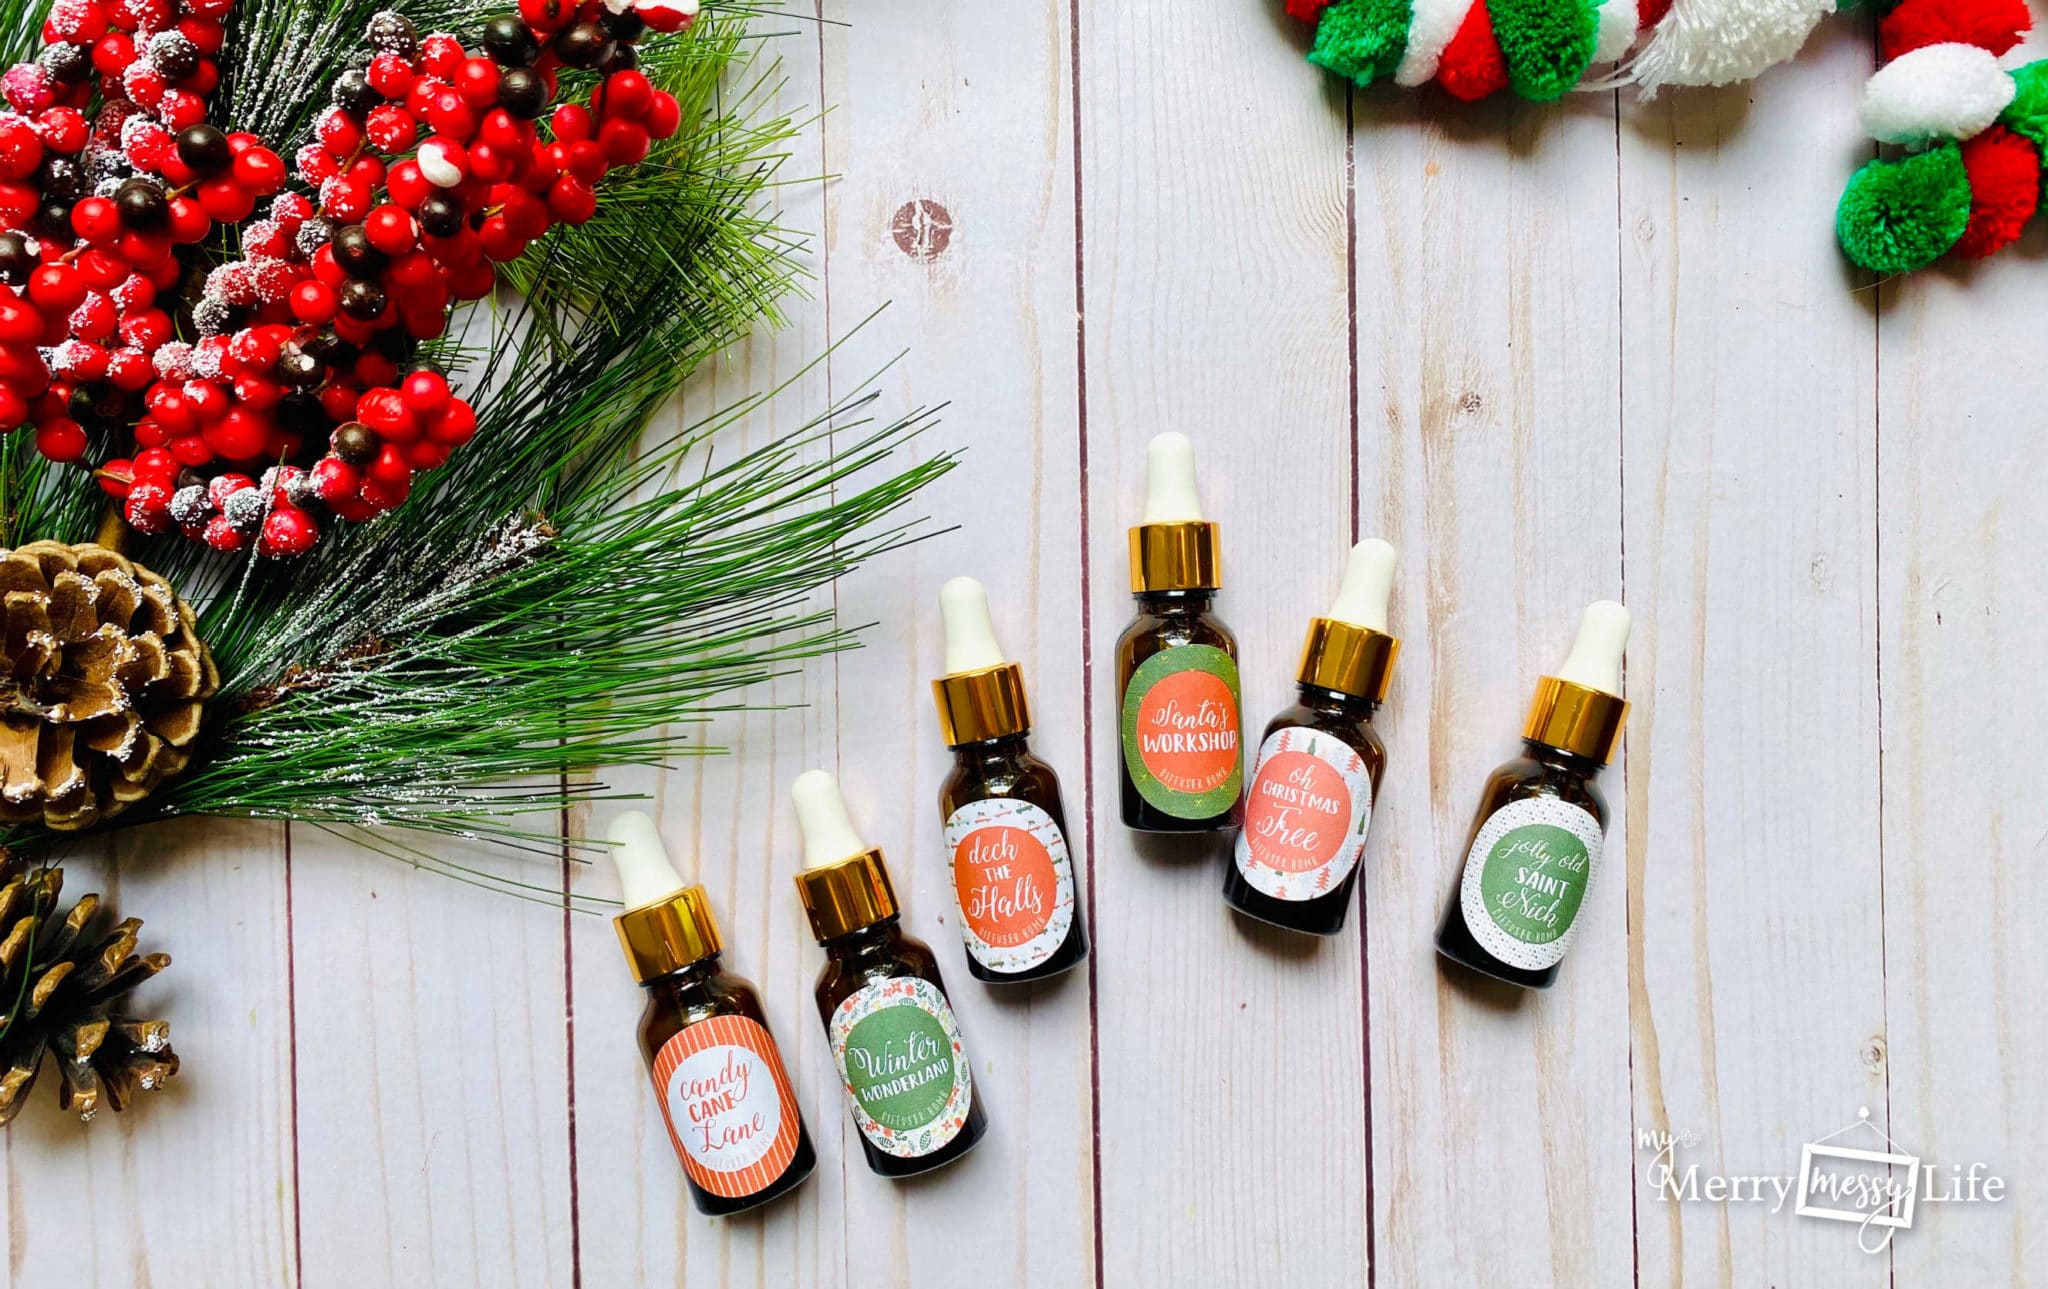 Holiday Diffuser Bomb Recipes using Essential Oils like Cinnamon, Clove, Orange, Nutmeg, Pine, Cedarwood, Spruce and more!